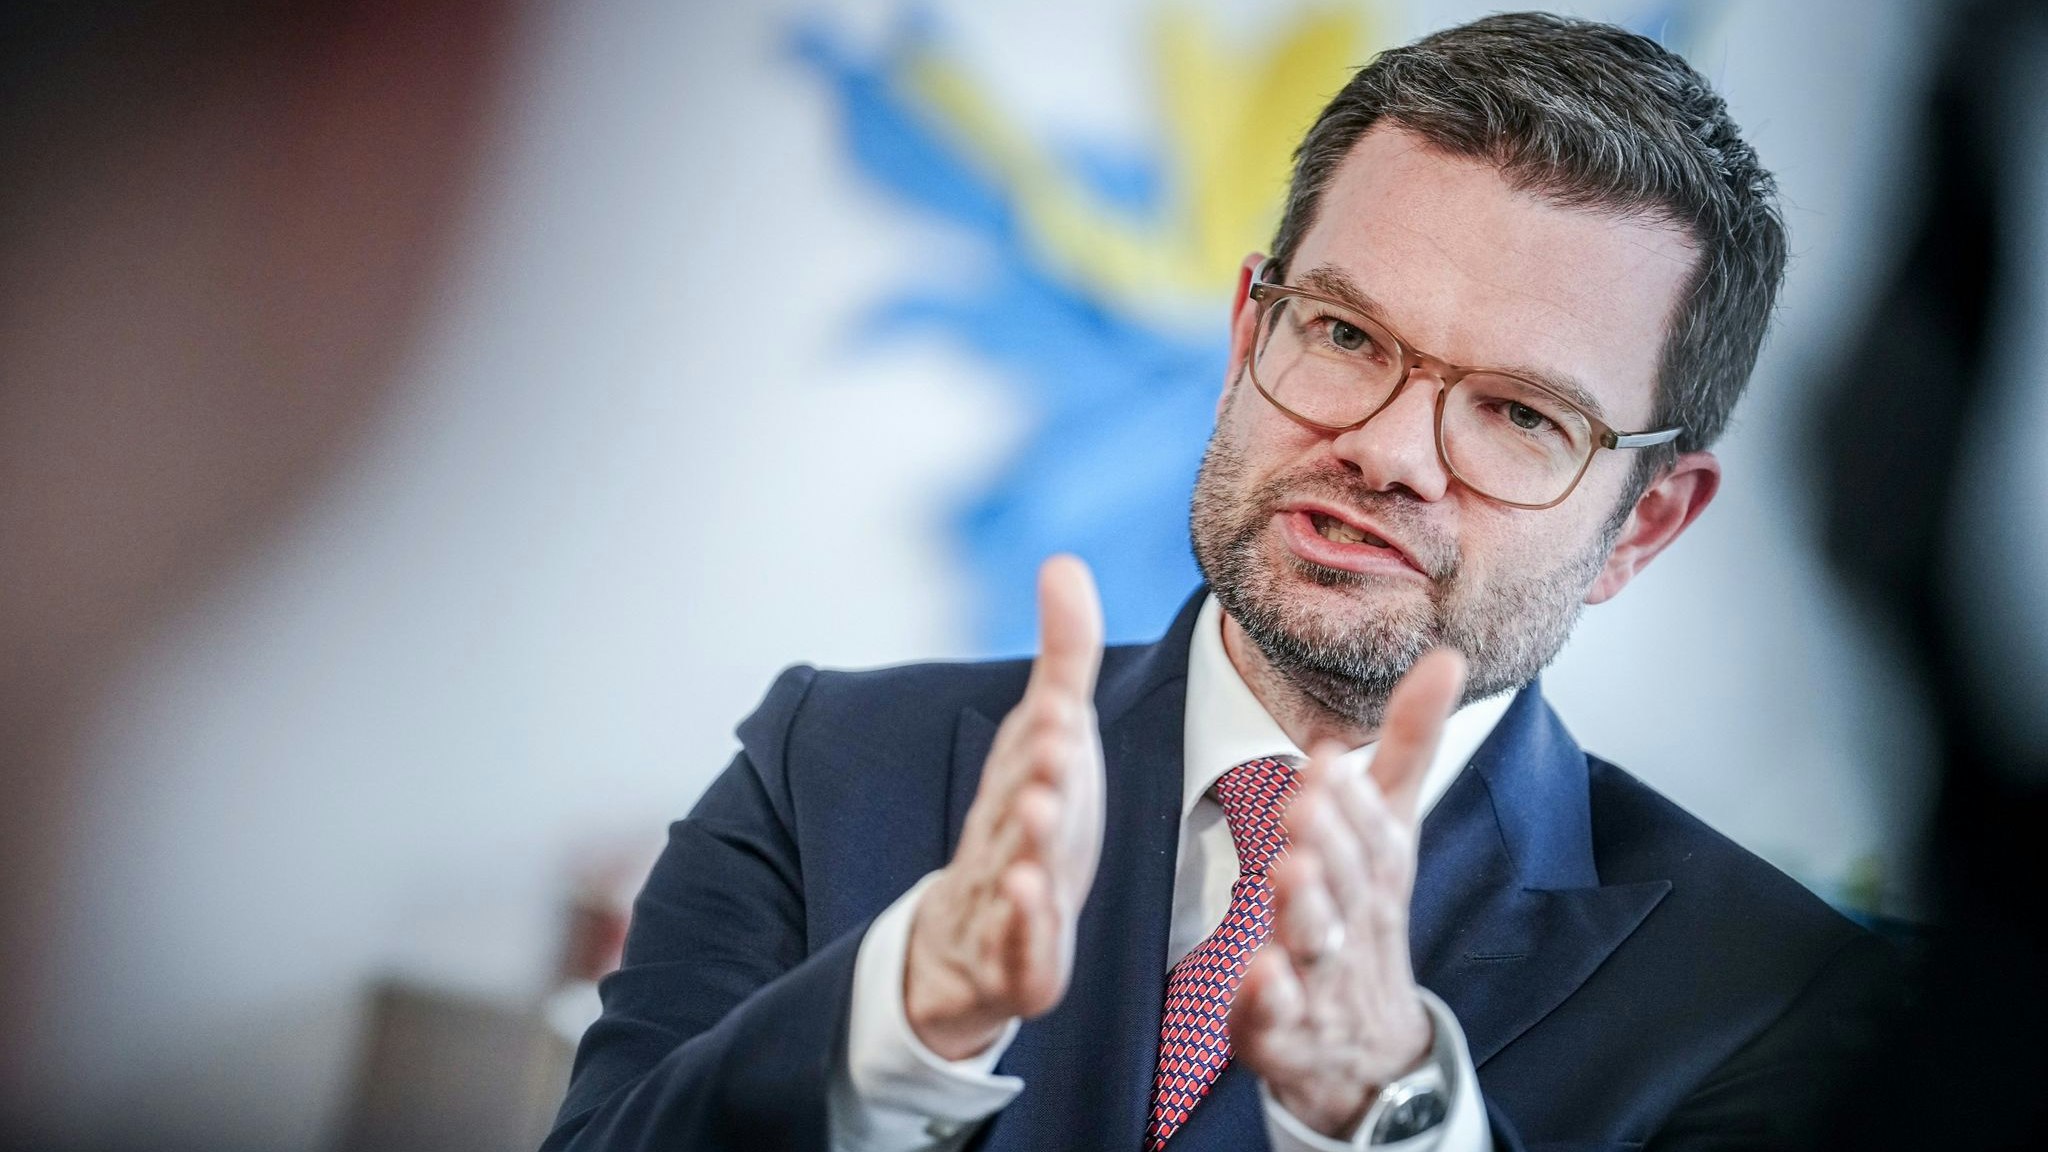 Bundesjustizminister Marco Buschmann will das Unterhaltsrecht reformieren. Foto: dpa/Nietfeld